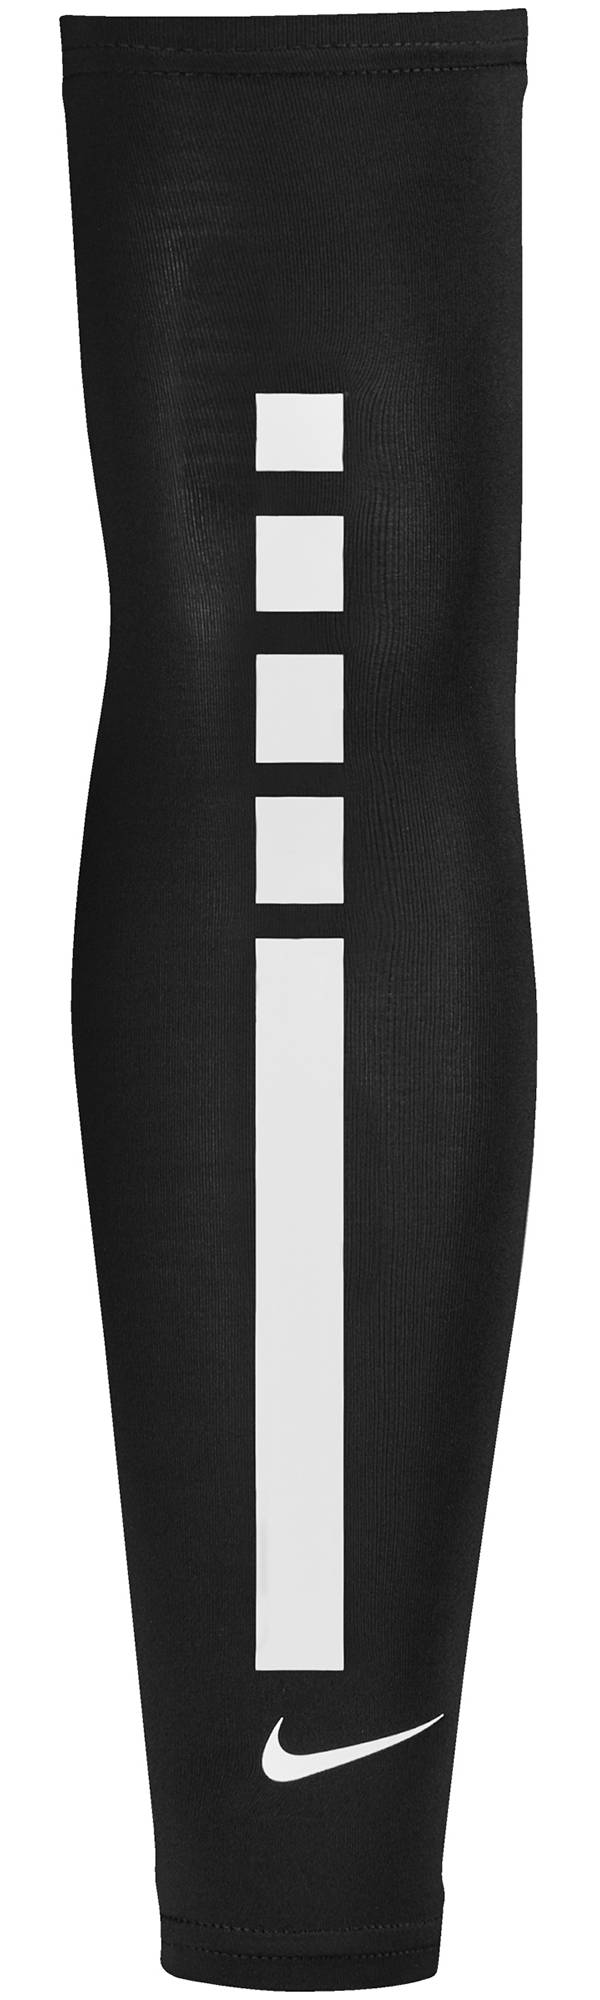 Nike Performance SHOOTER SLEEVE NBA - Arm warmers - black/white